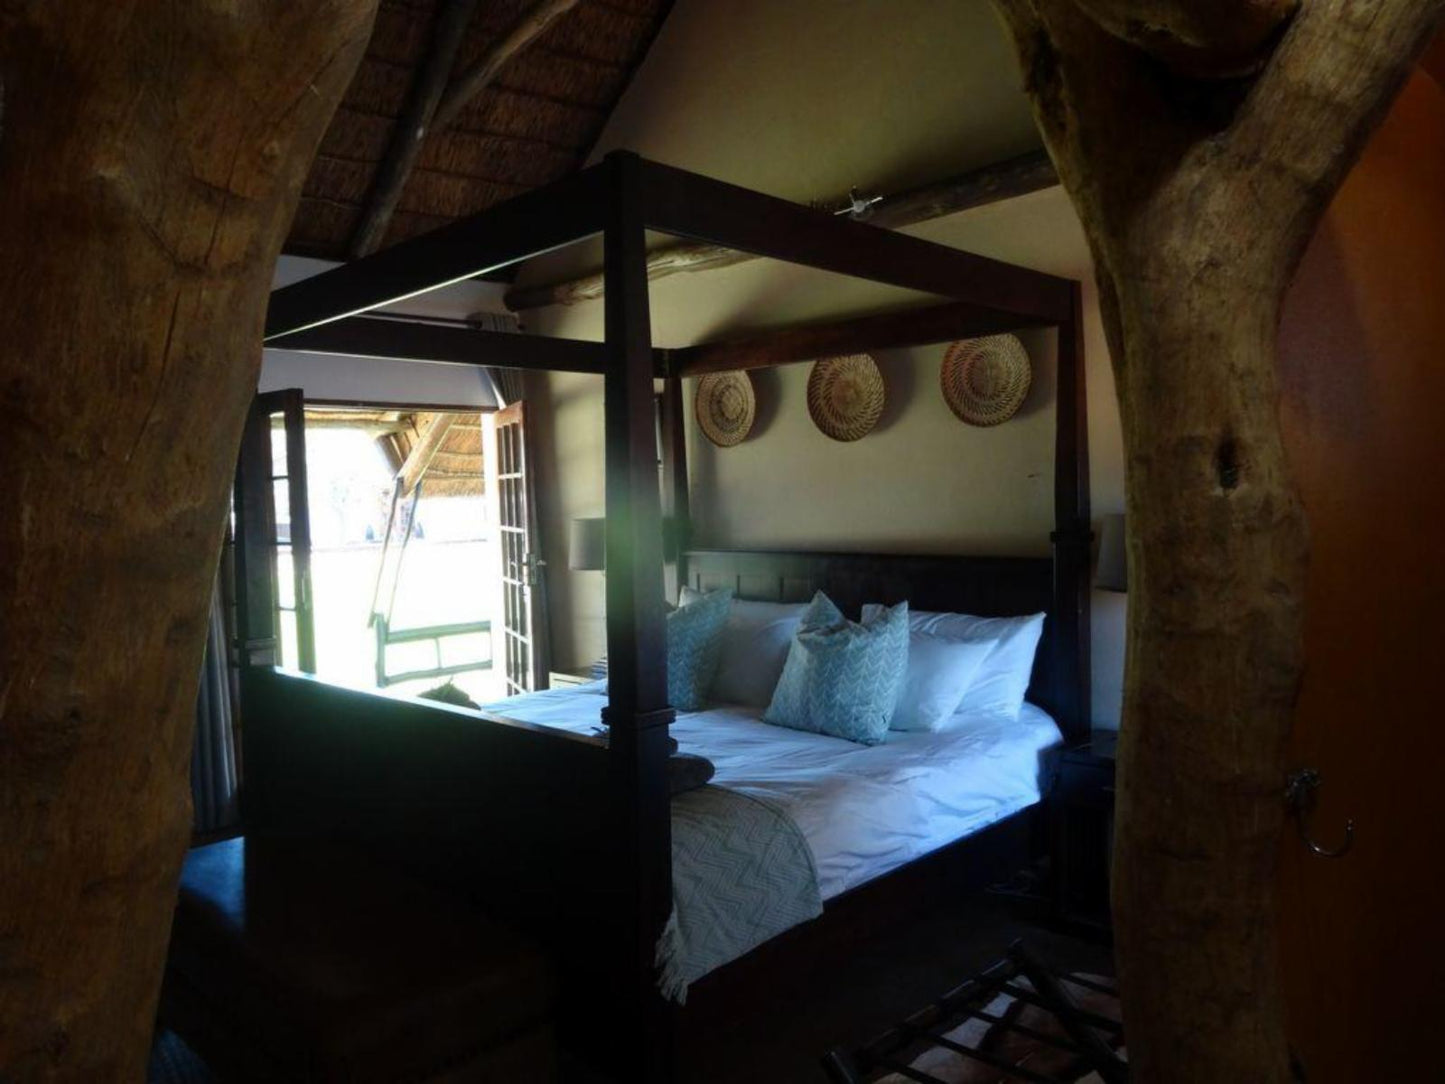 Standard Room @ Imbasa Safari Lodge